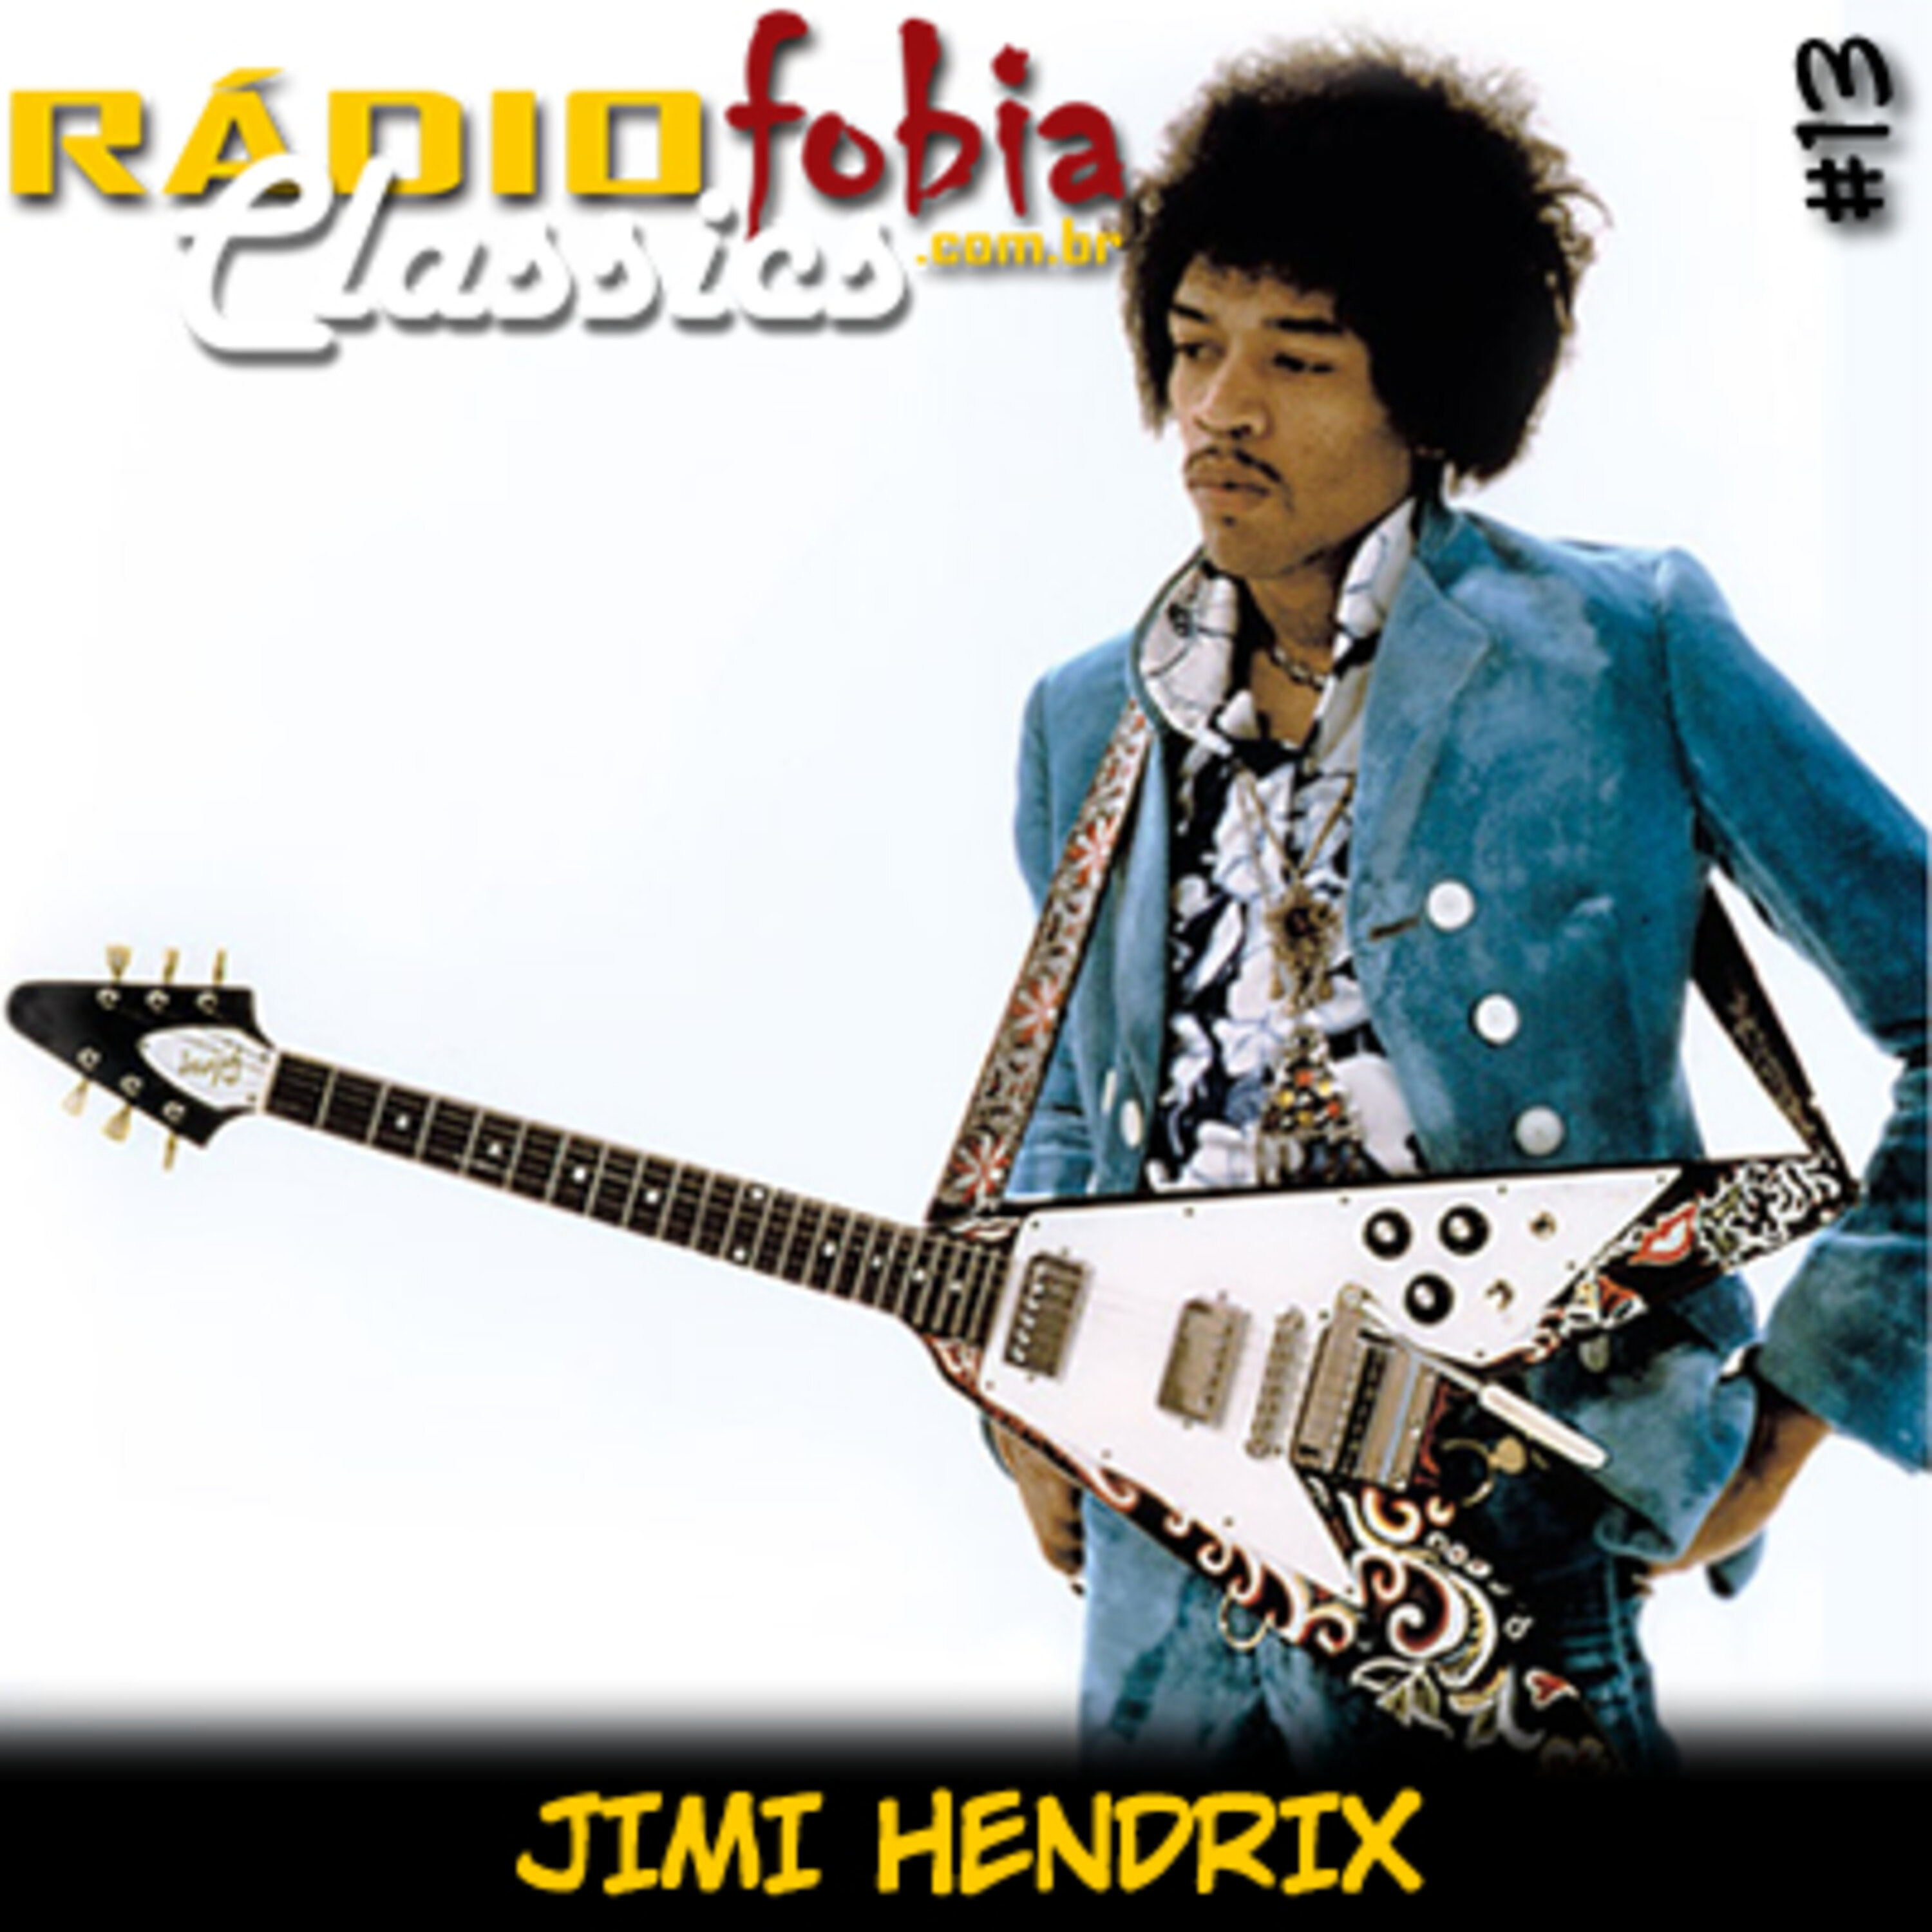 RÁDIOFOBIA Classics #13 – Jimi Hendrix